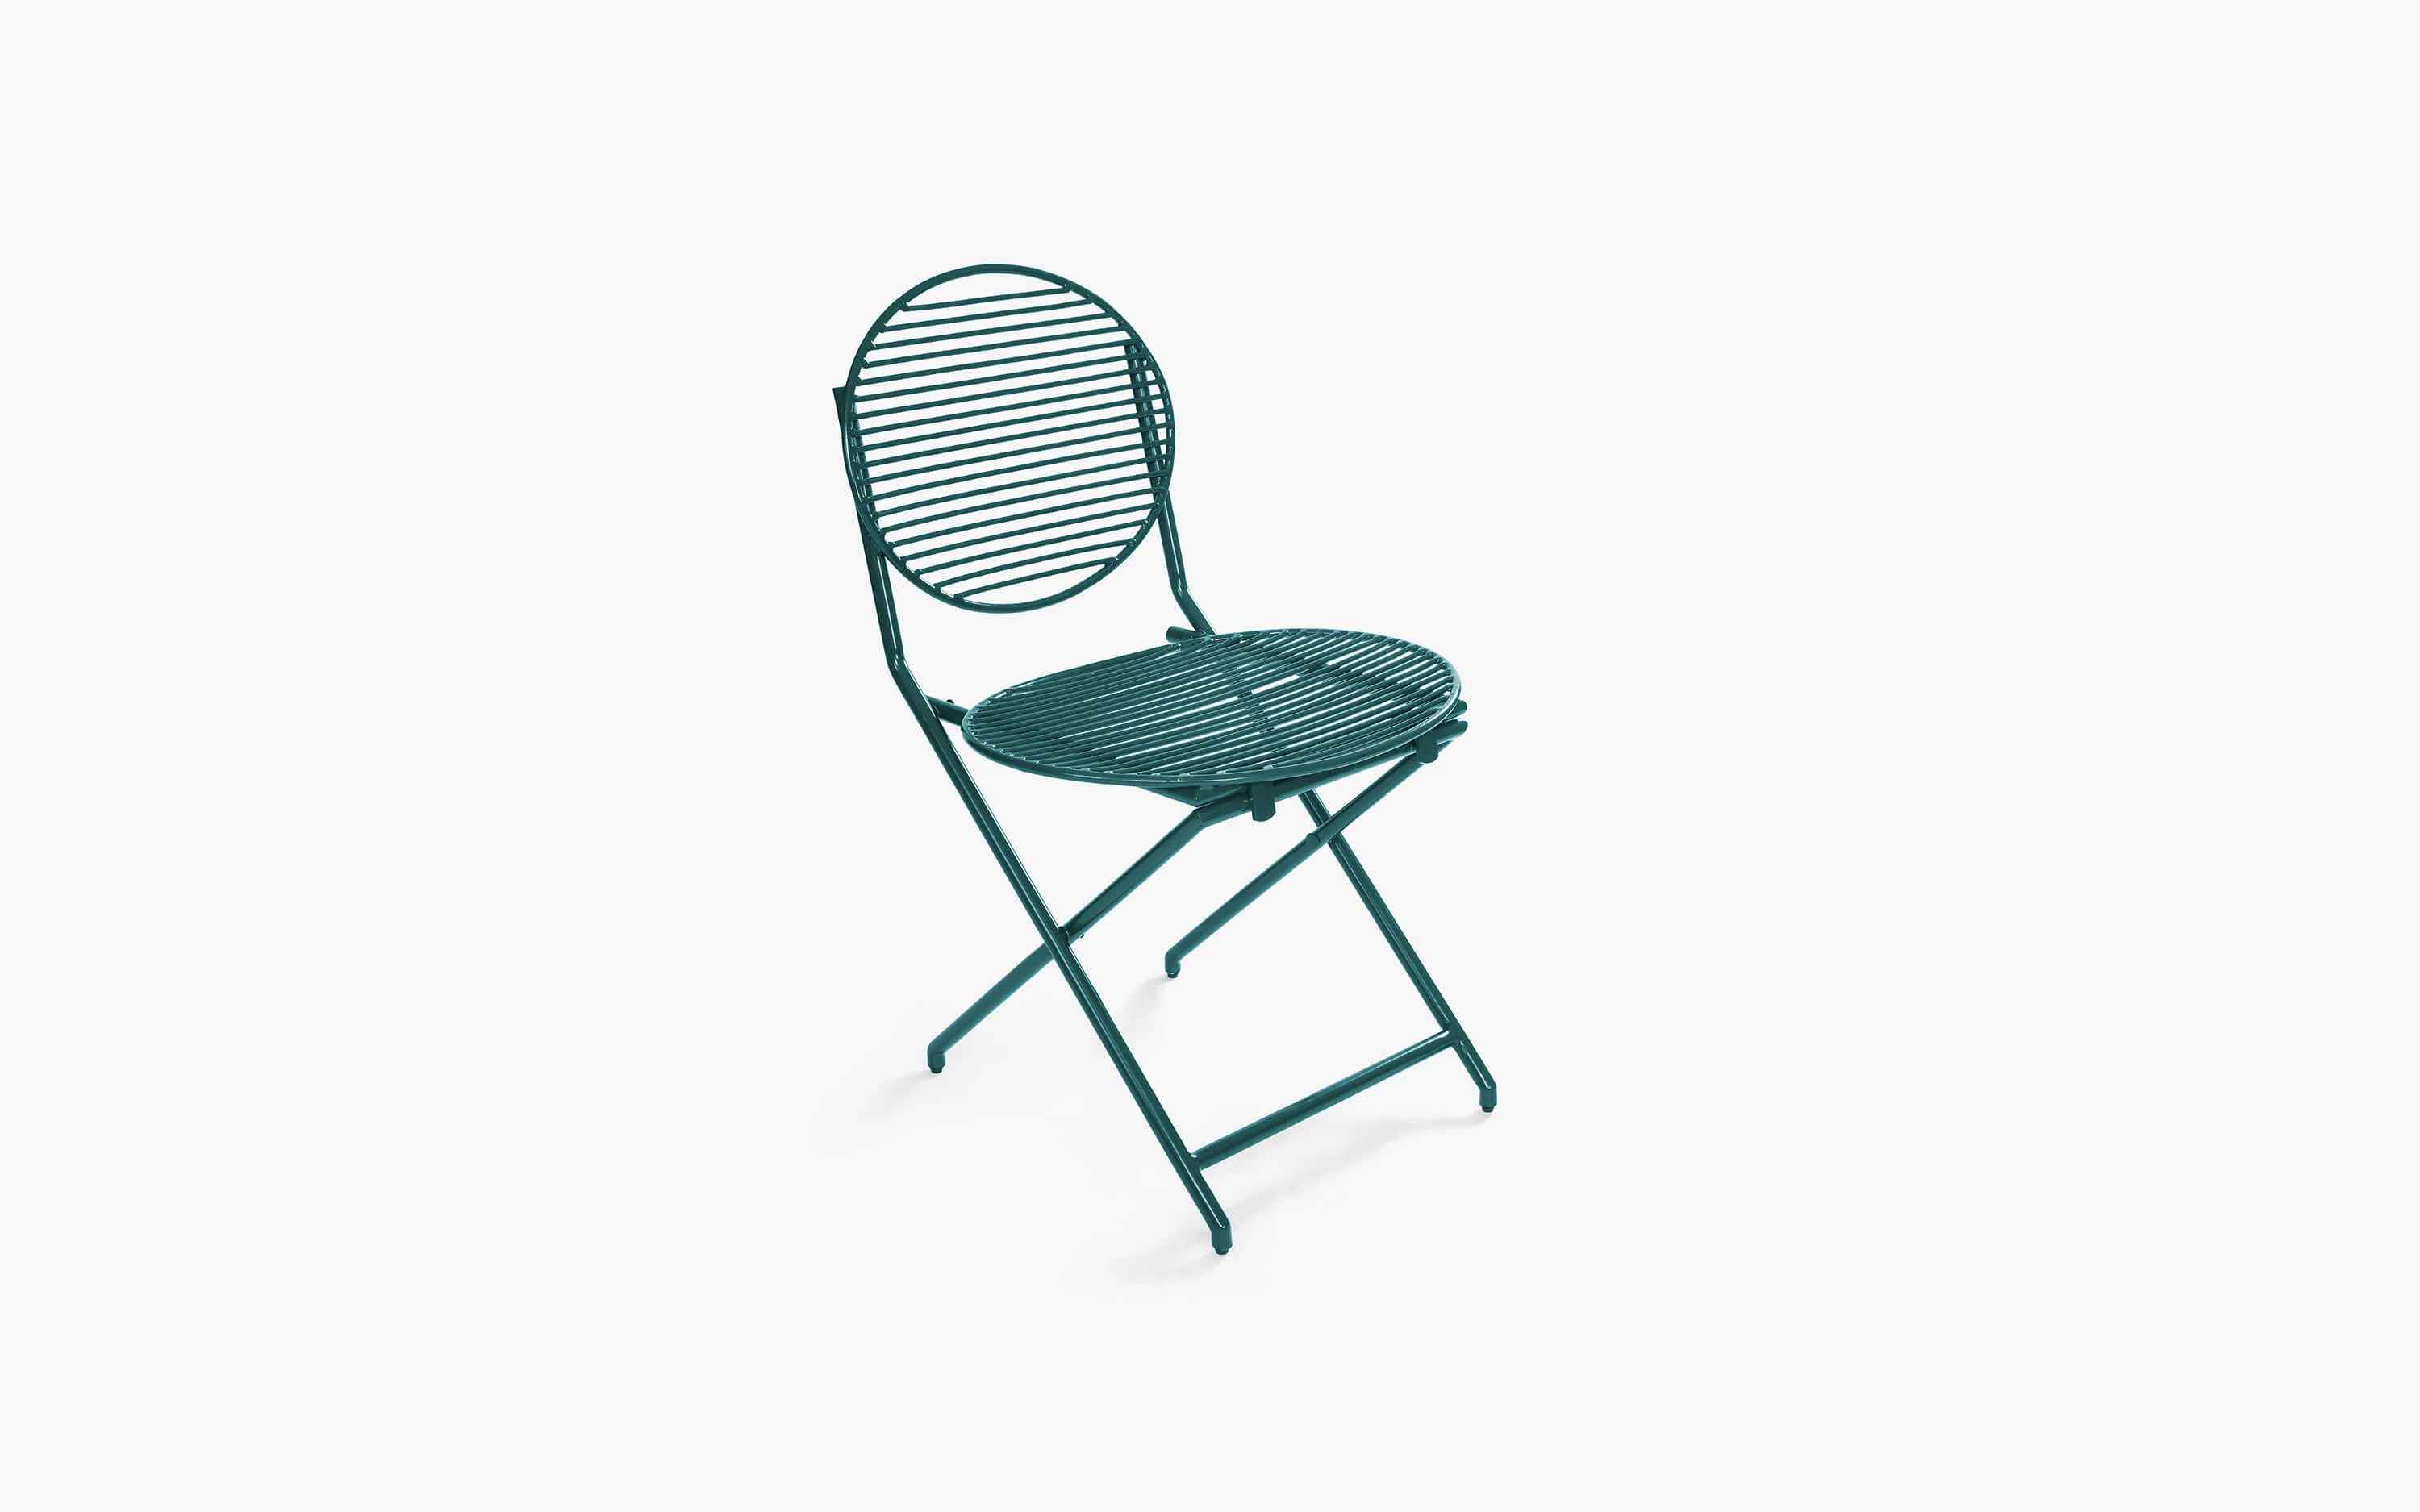 Patio Green Folding Chair